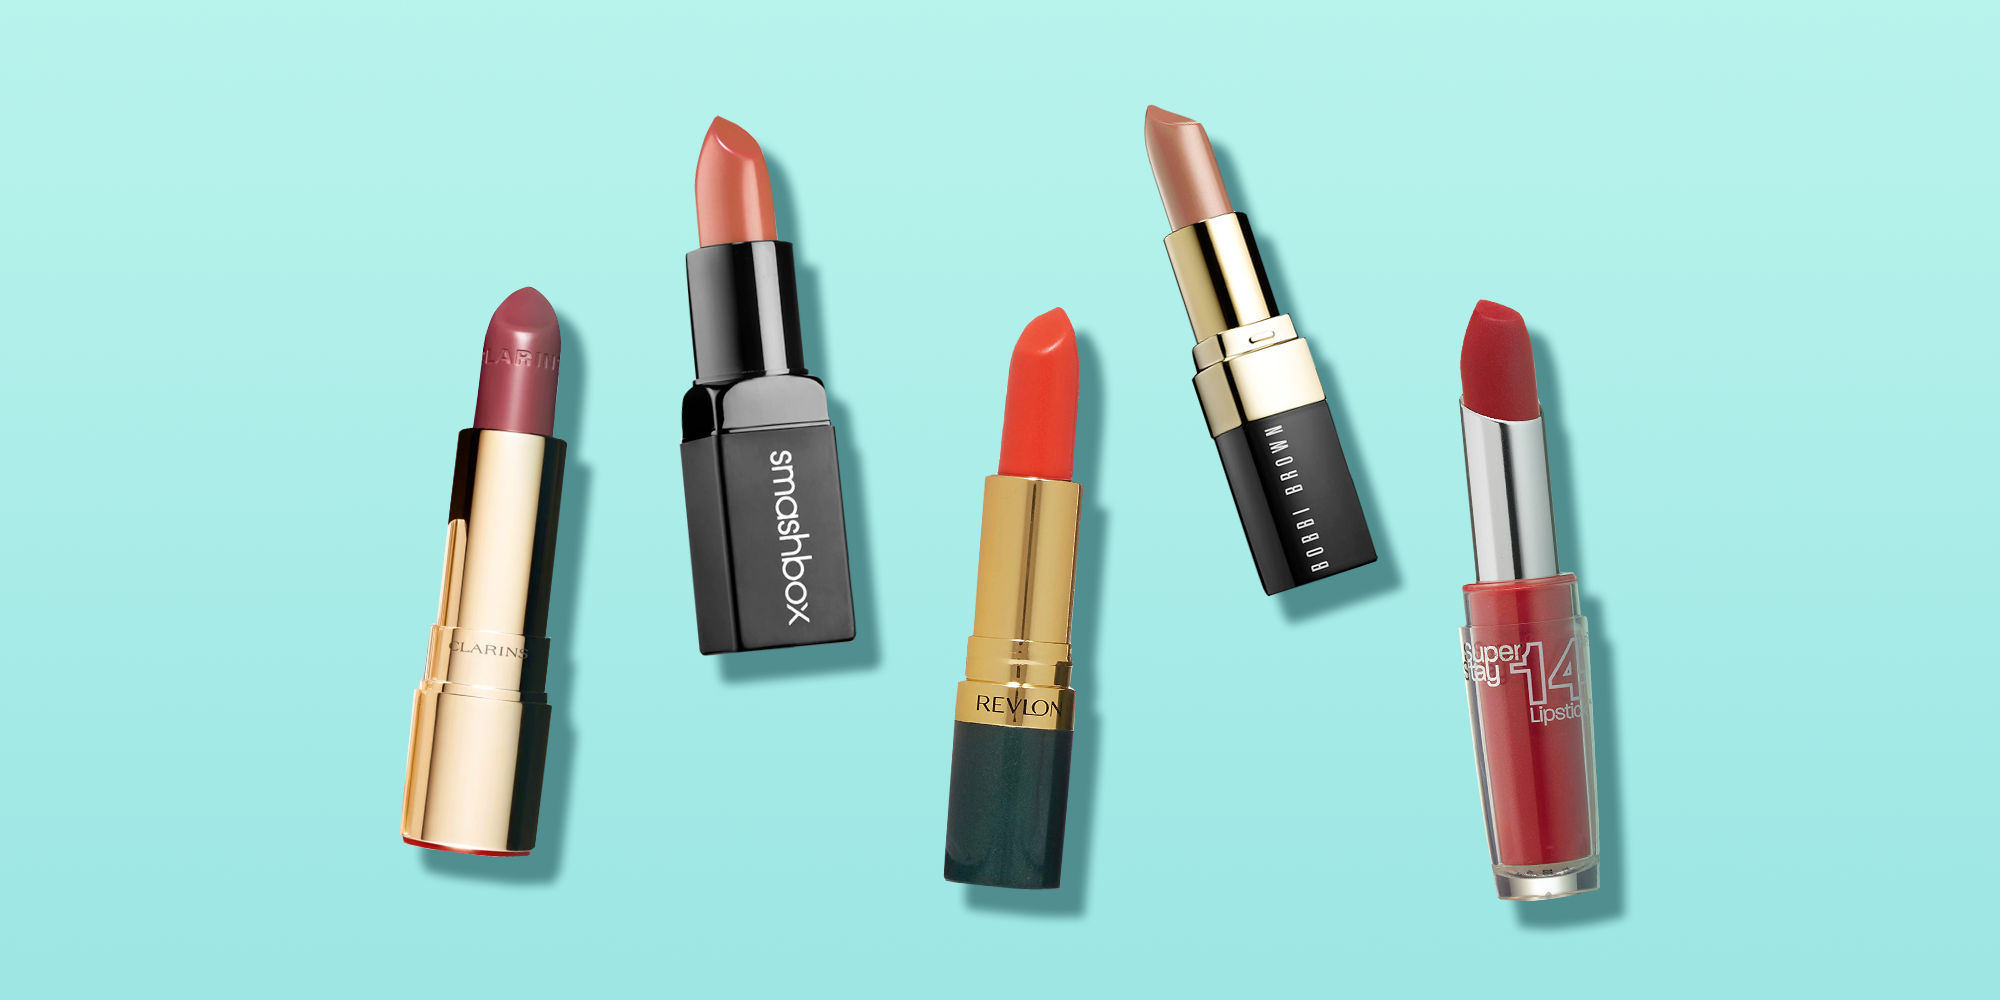 6 Best Lead-Free Lipsticks of 2020 - Safest, Non-Toxic Lipstick Brands